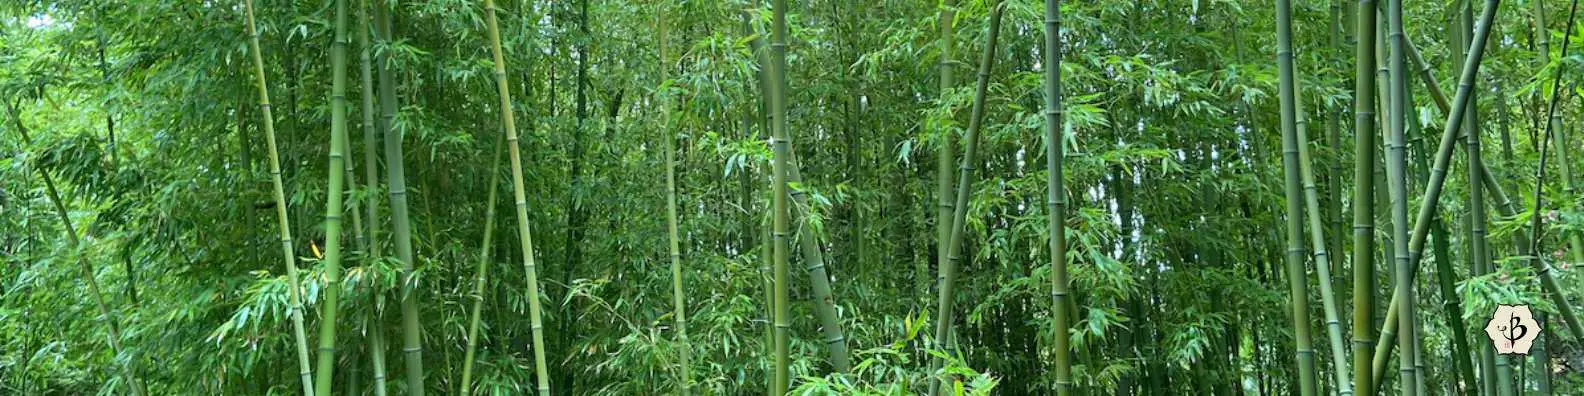 Green wax bamboo banner